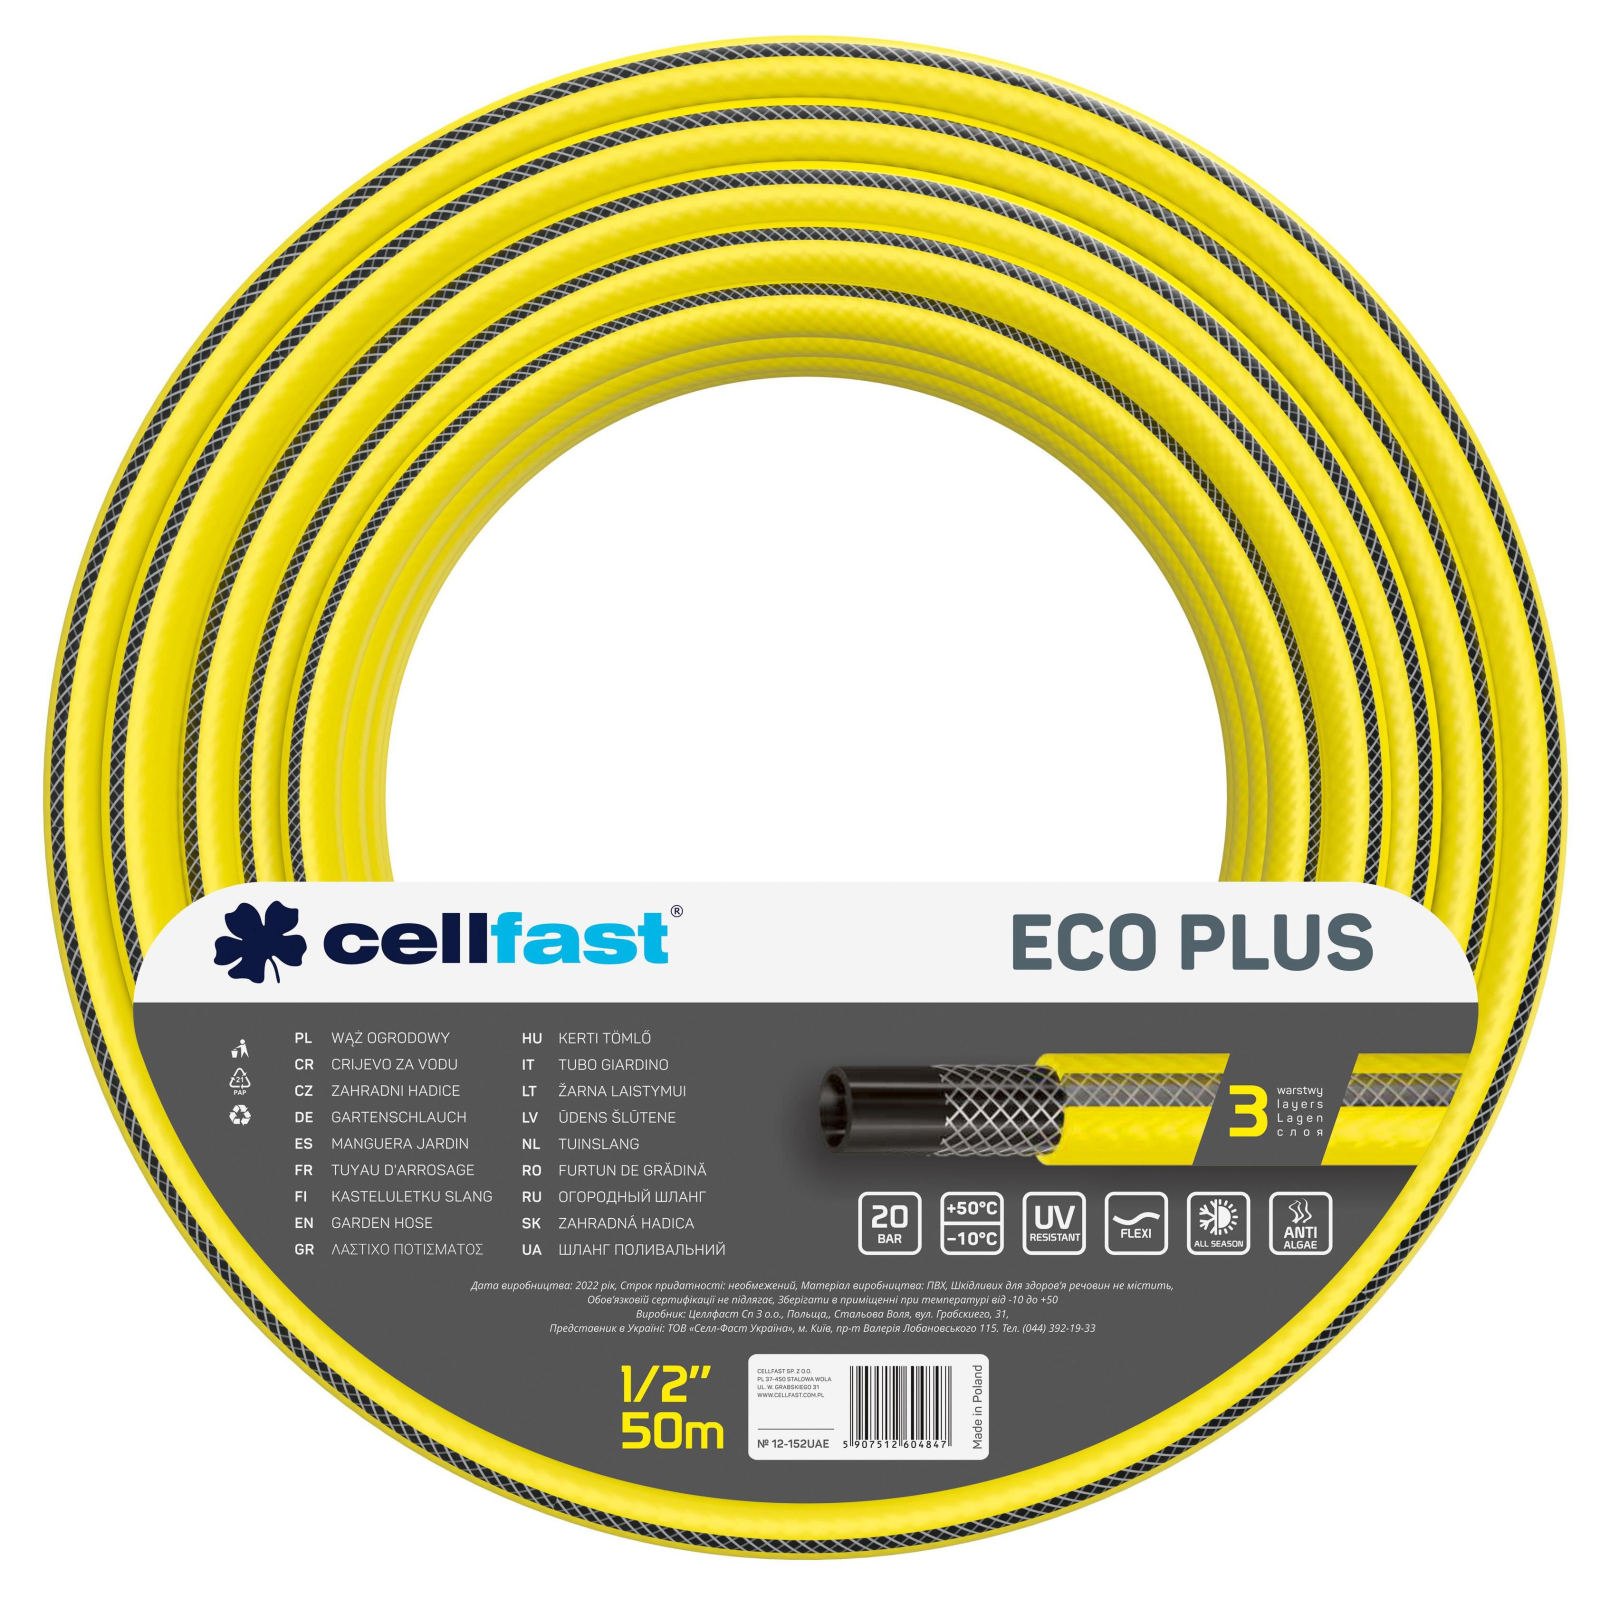 Поливочный шланг Cellfast ECO PLUS 1/2" 50м, 3 слоя, до 20 Бар, -10…+50°C (12-152)